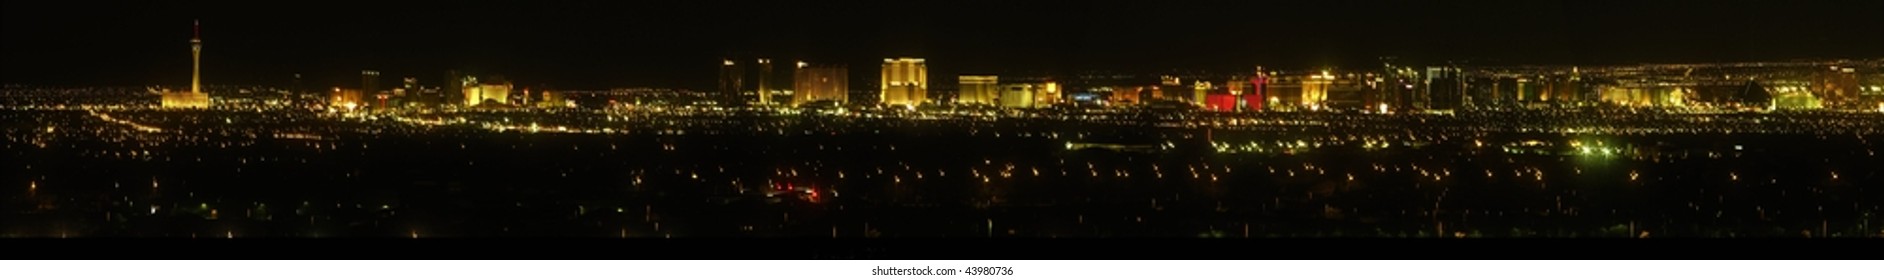 Panoramic Photo Of Las Vegas In 2008 At Night.